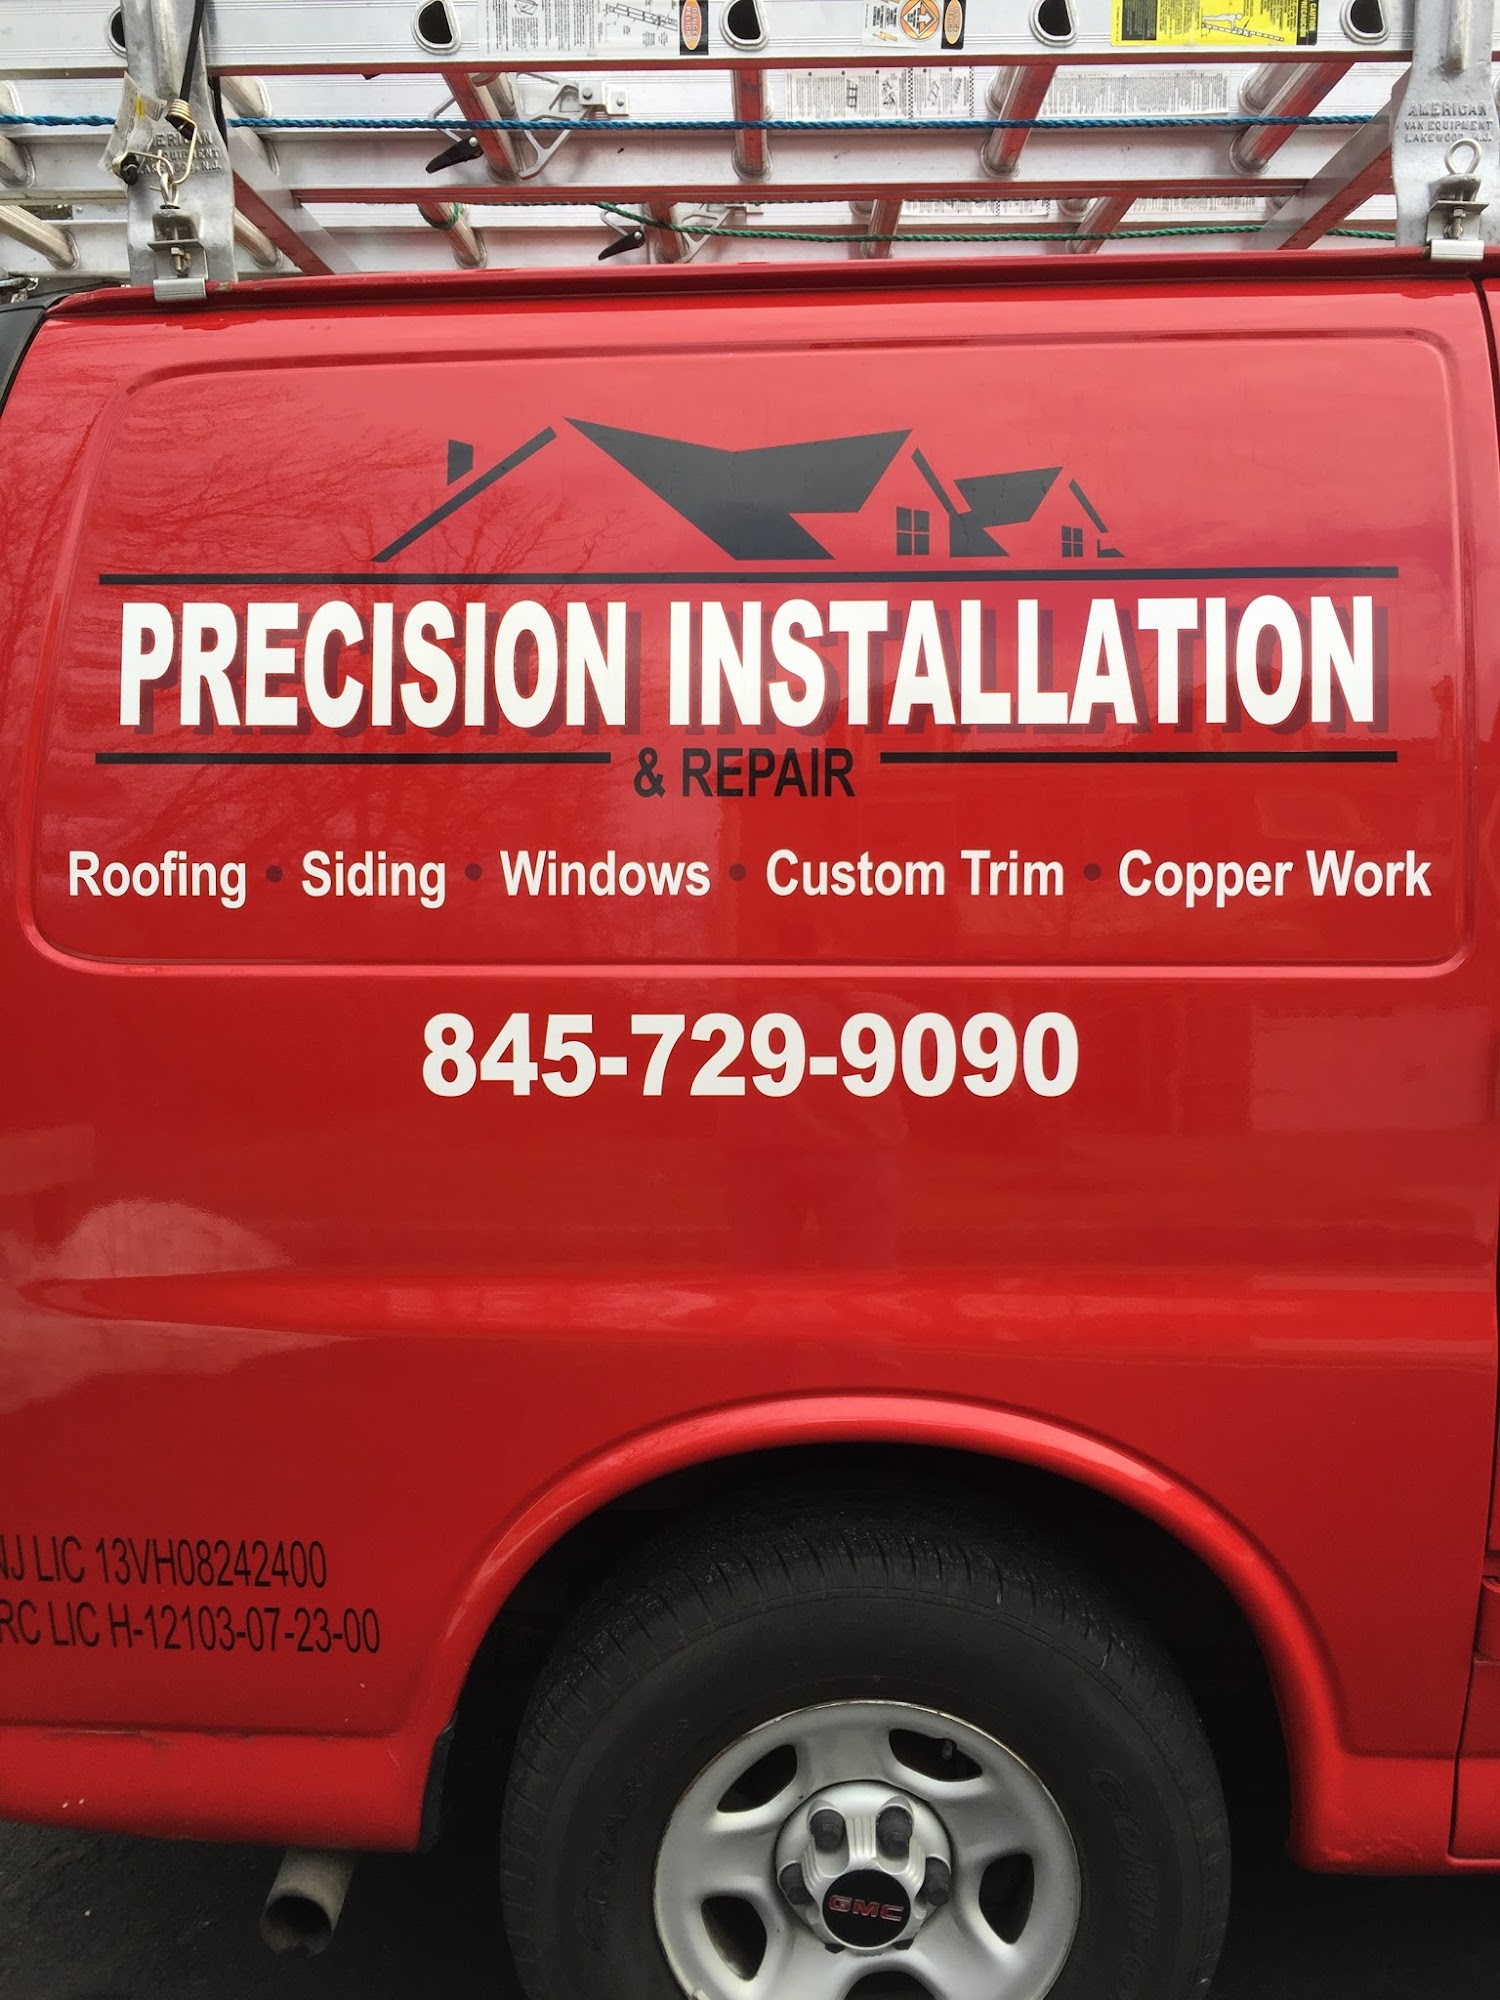 Precision Installation & Repair E Saddle River Rd, Upper Saddle River New Jersey 07458